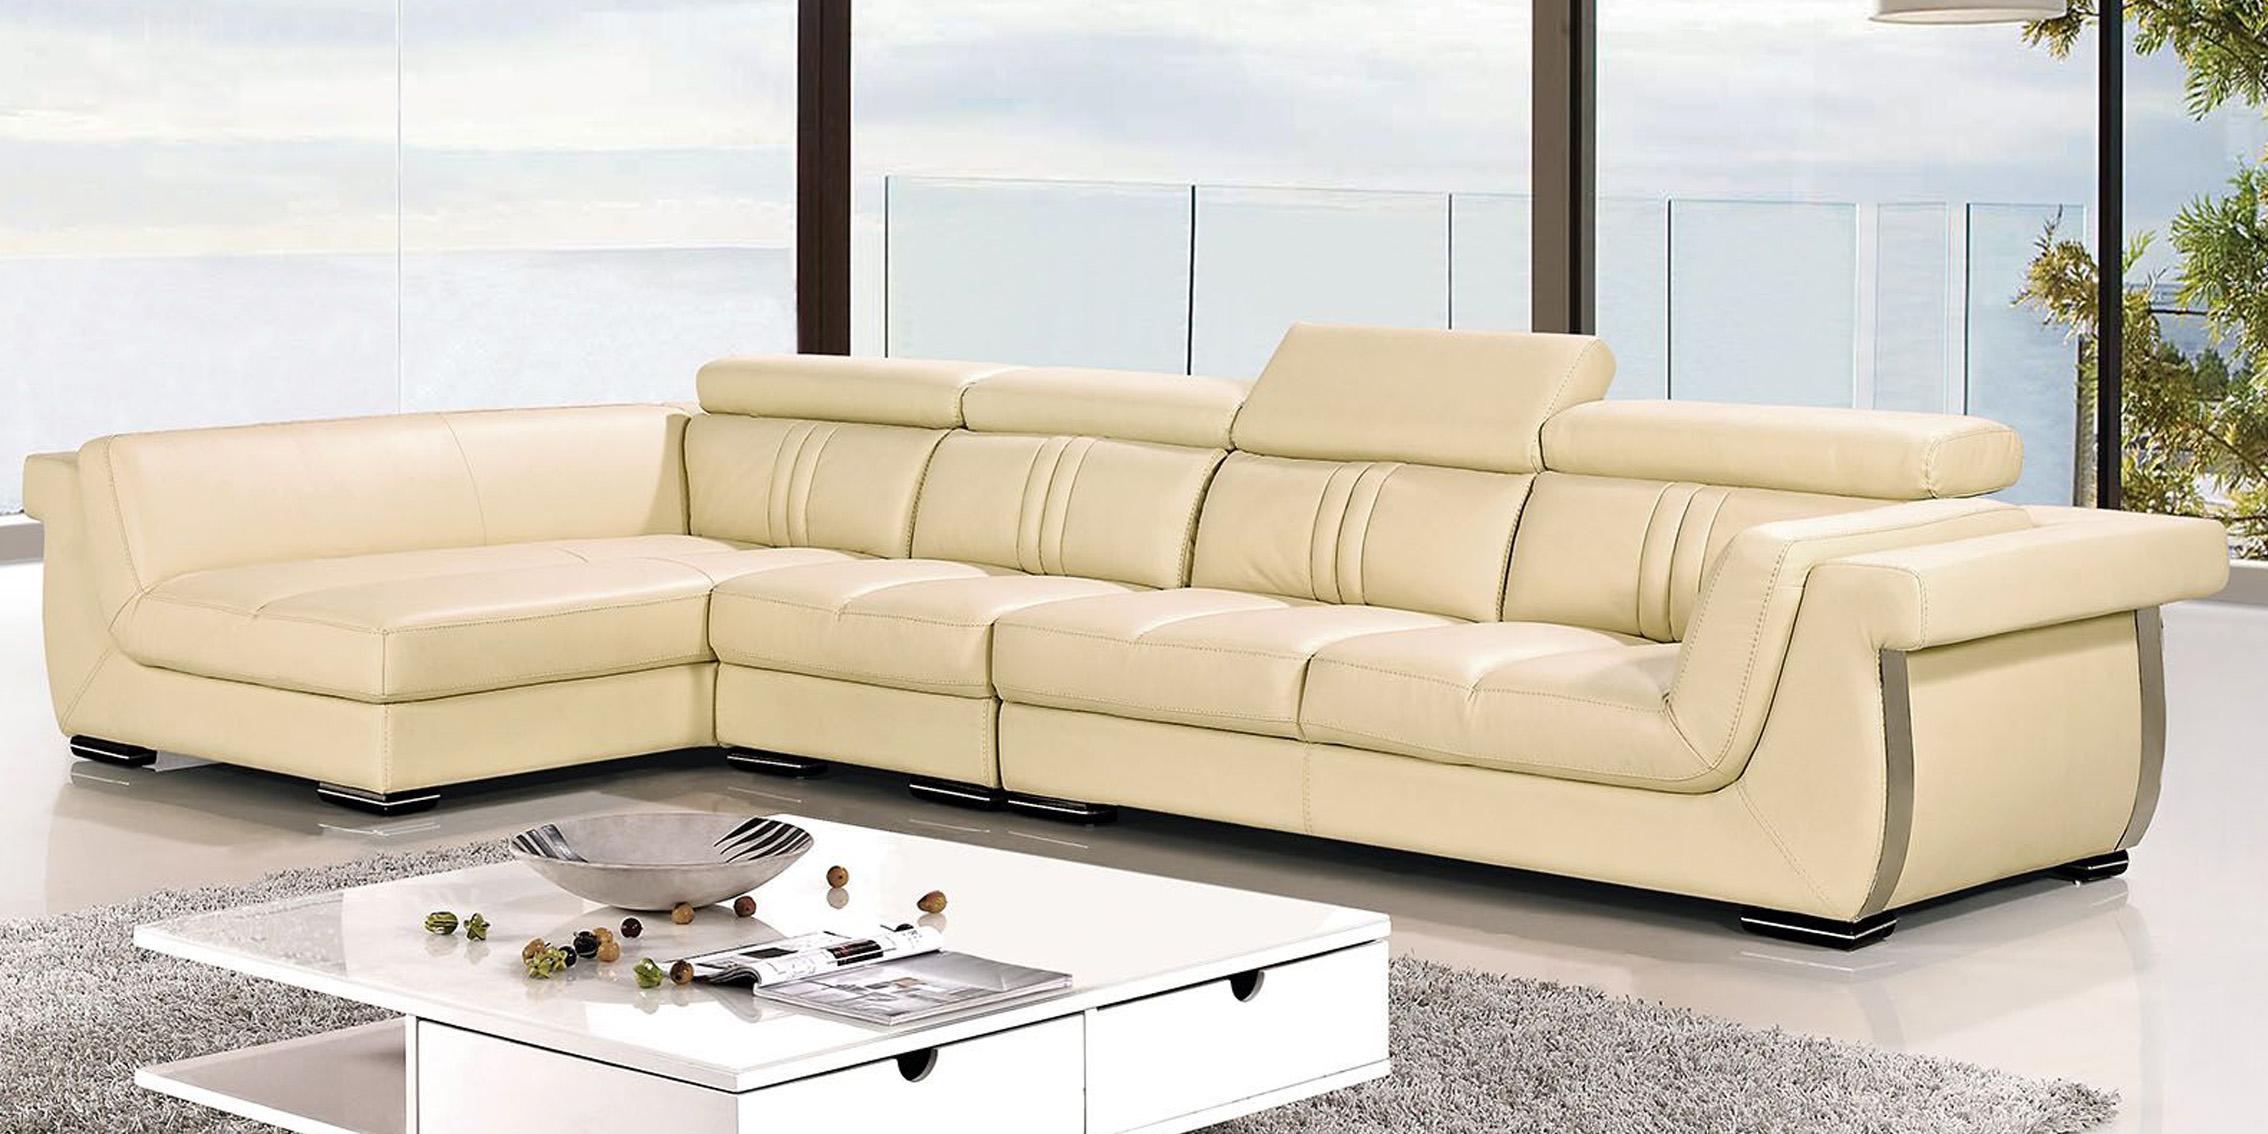 Contemporary, Modern Sectional Sofa EK-L202R-CRM EK-L202R-CRM in Cream Italian Leather